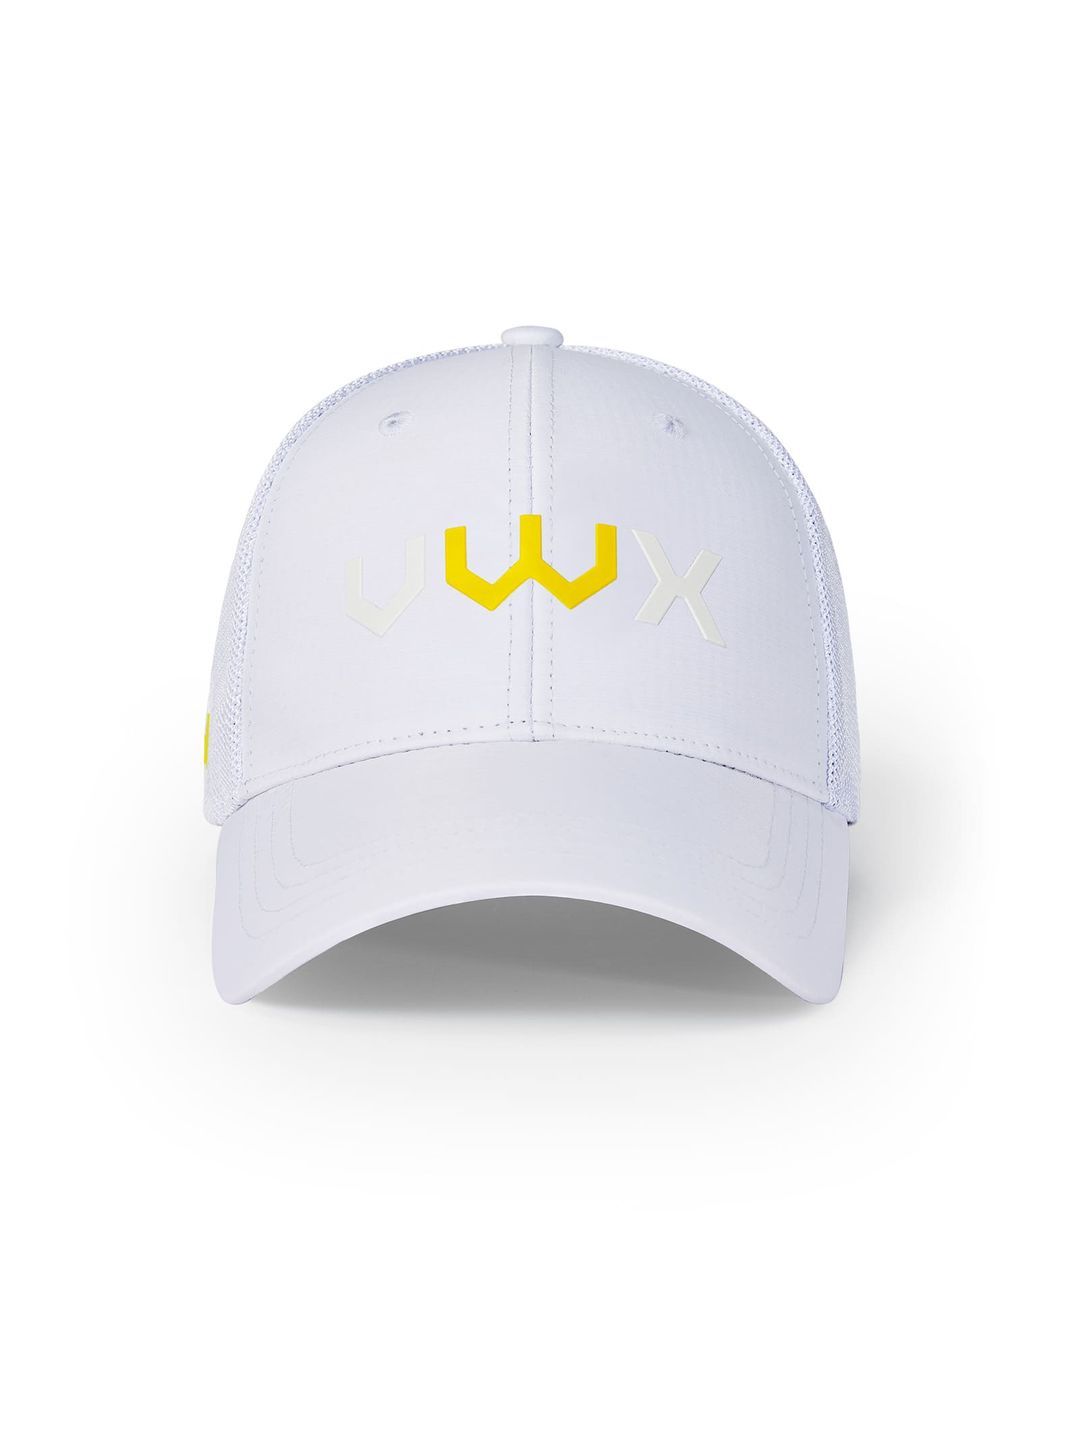 vwx viewer online